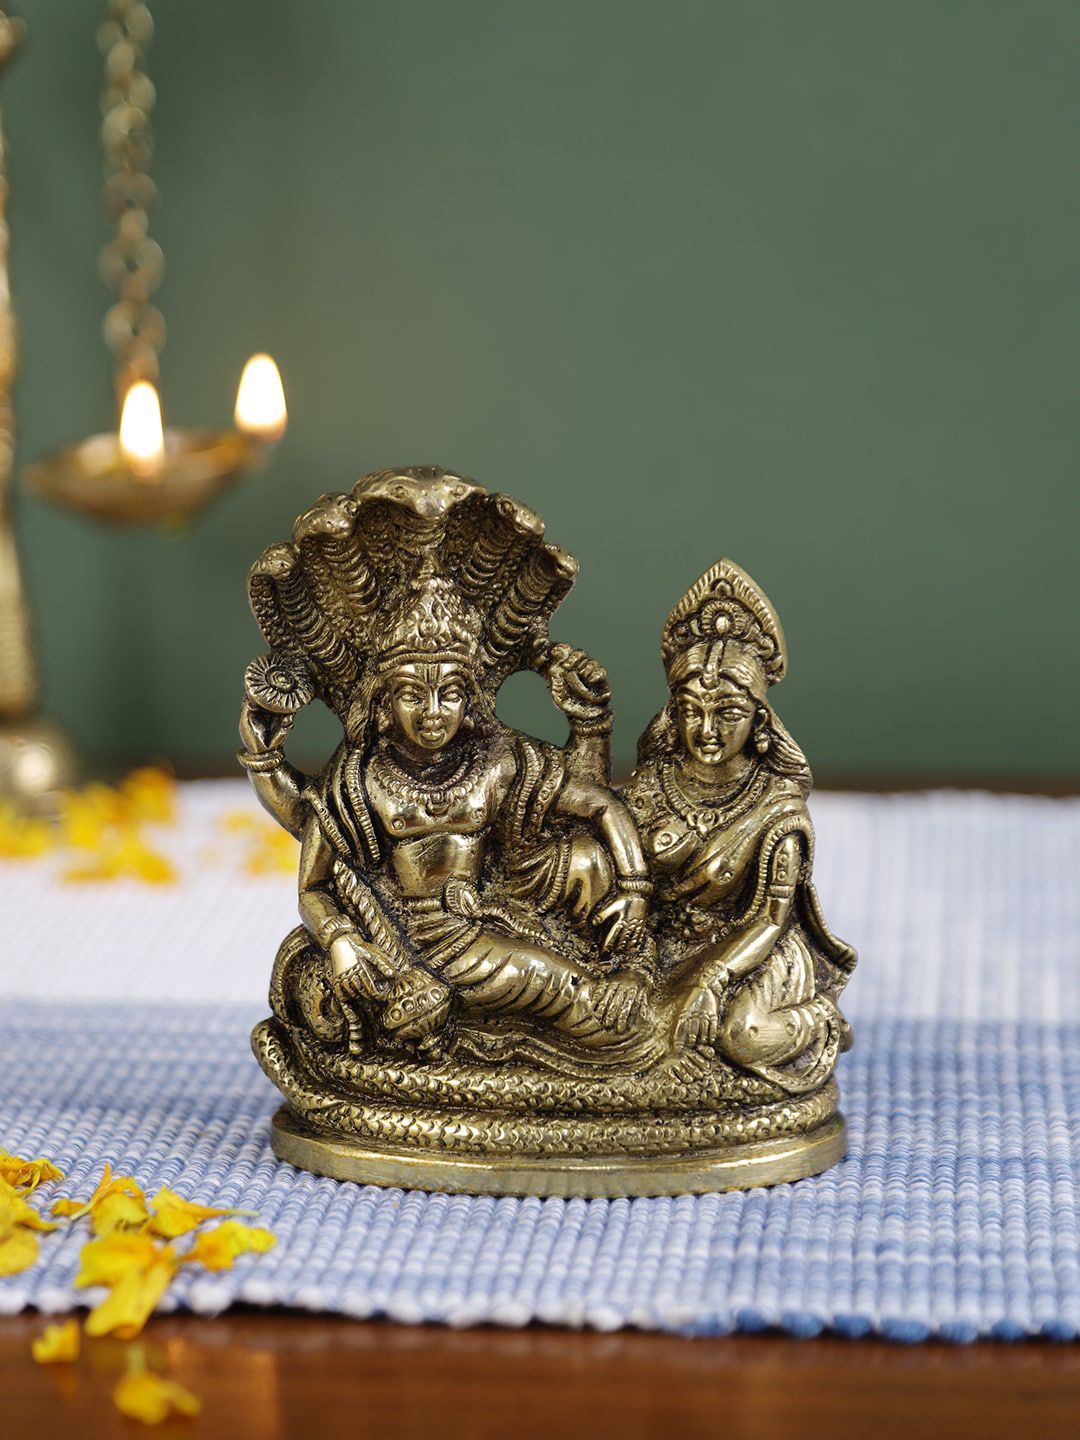 Imli Street Gold-Toned Vishnu Laxmi Idol Showpieces Price in India